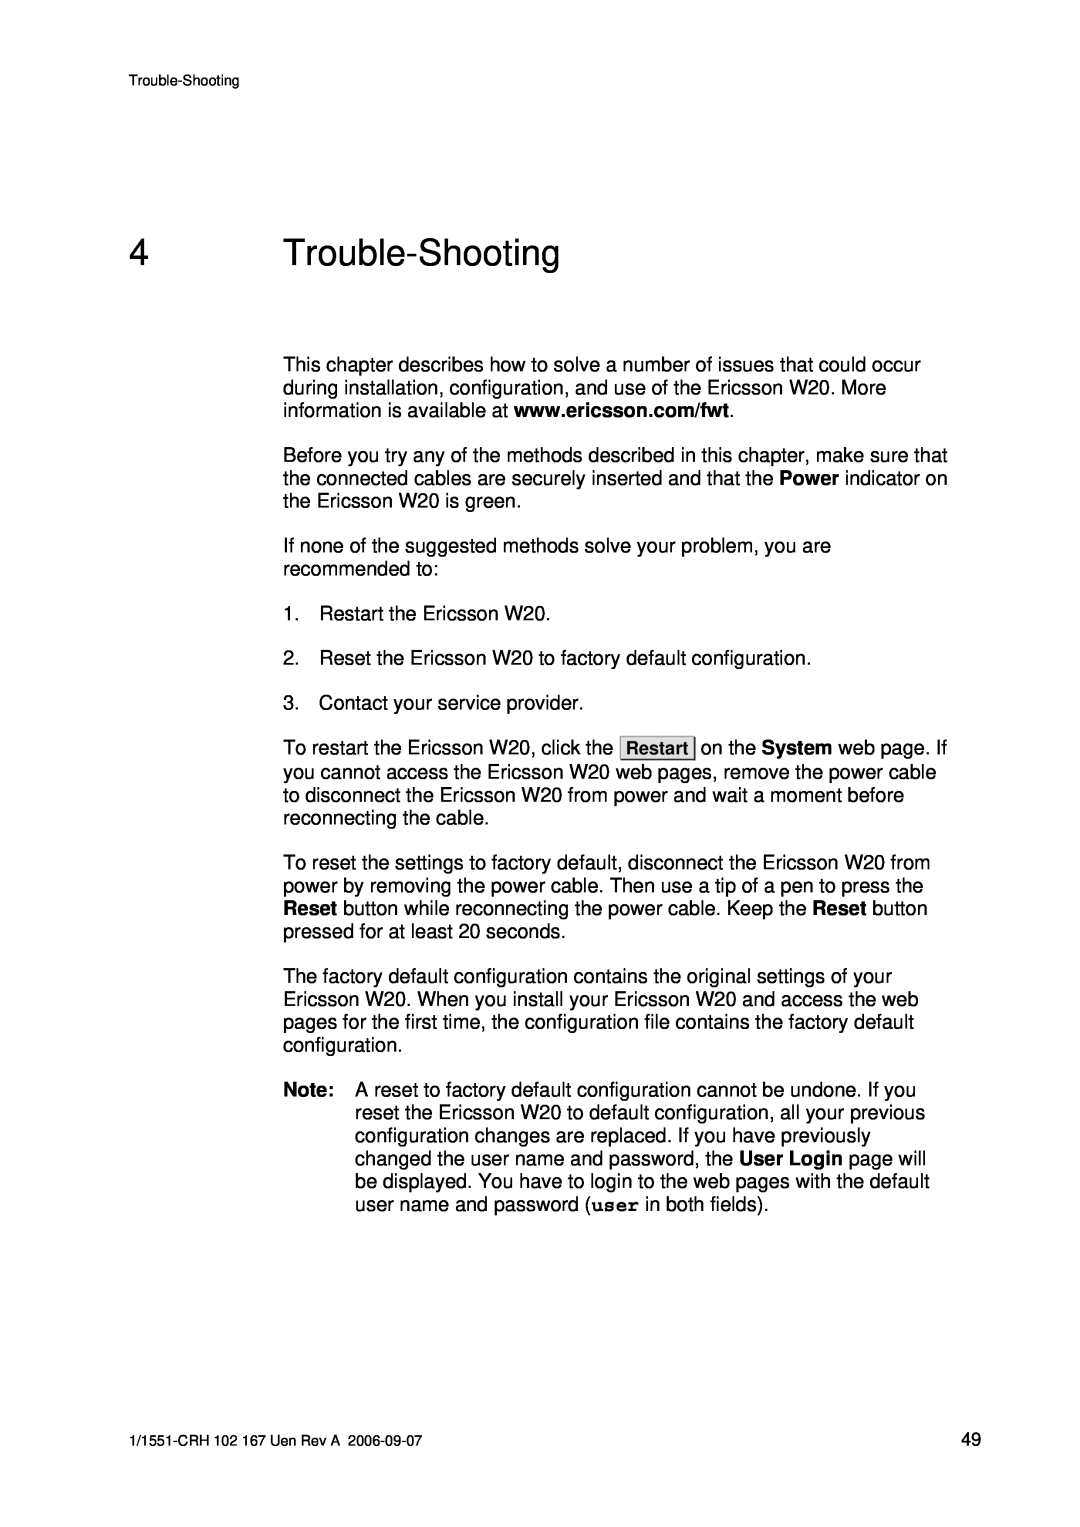 Ericsson W20 manual Trouble-Shooting 